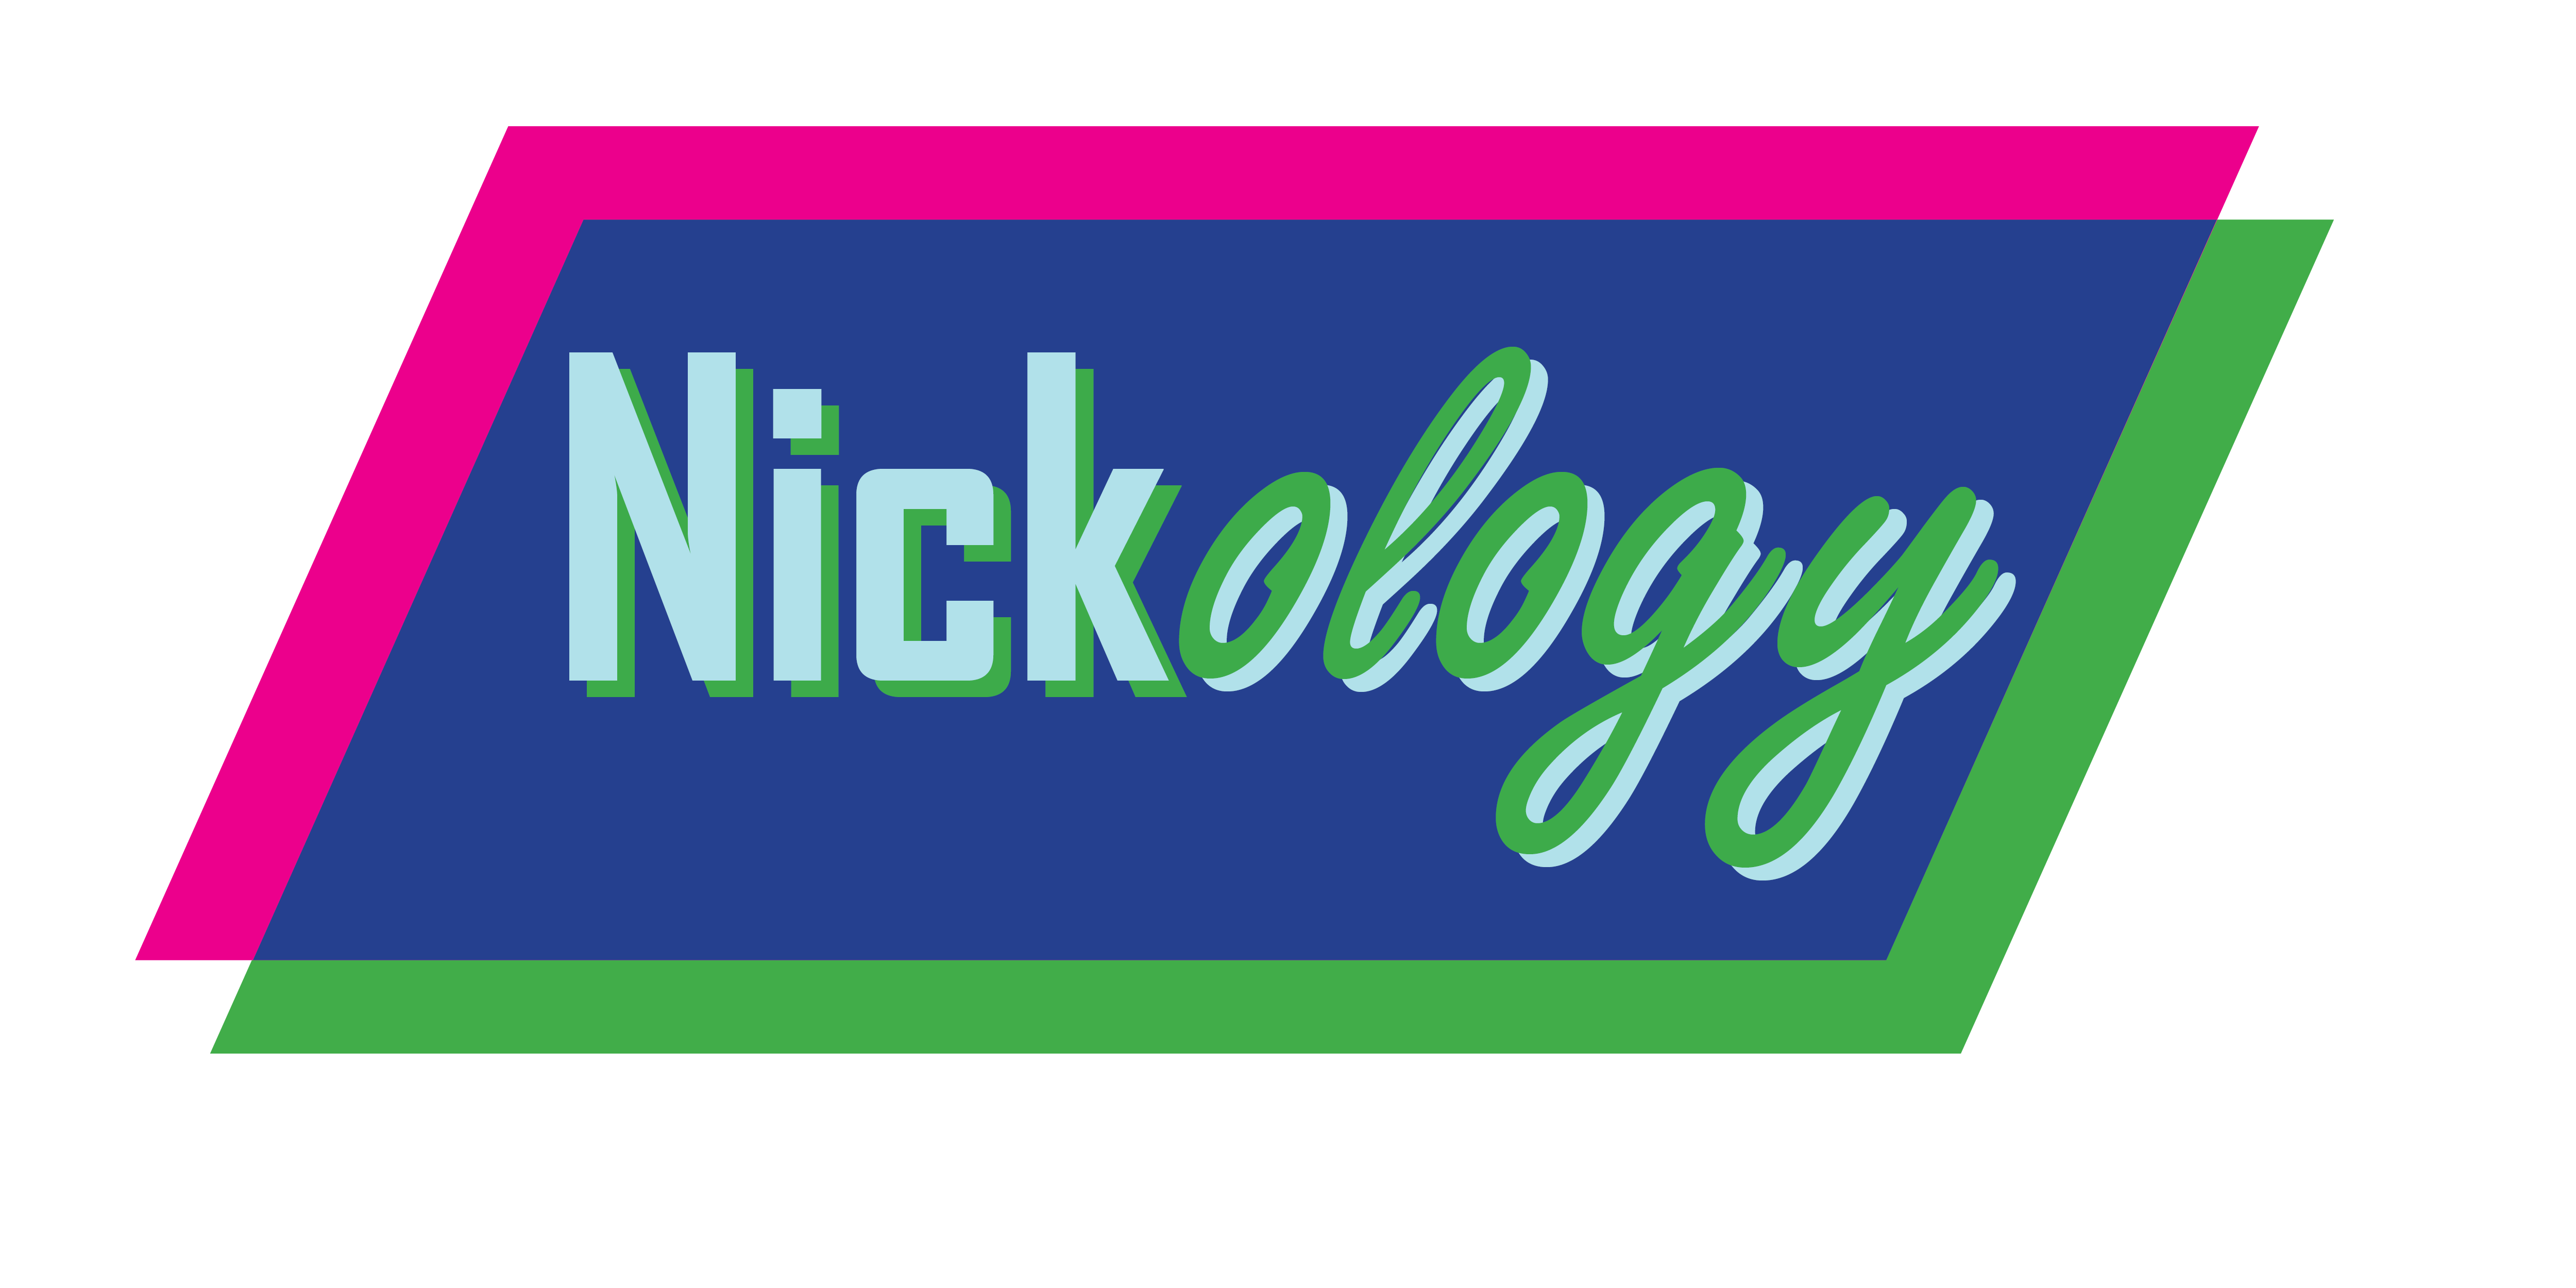 Nickology